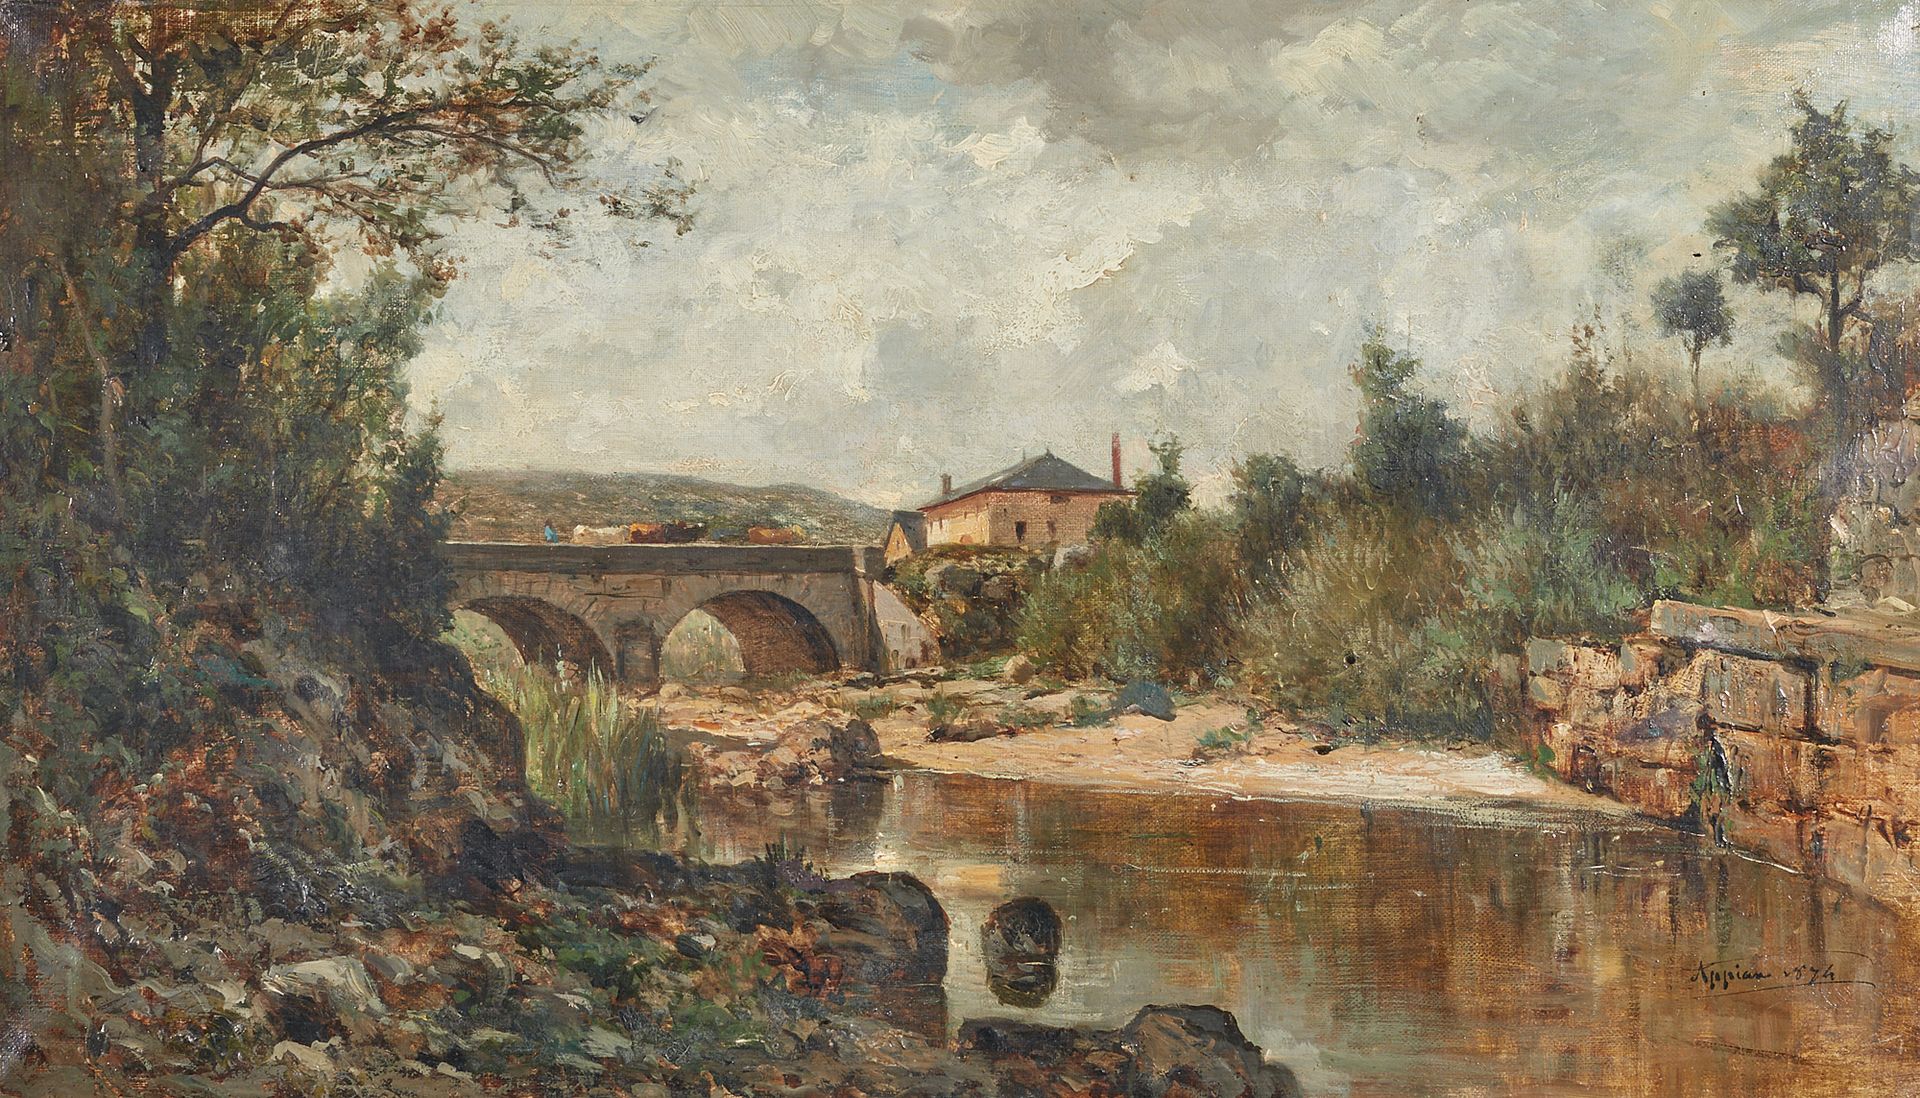 Adolphe APPIAN (1818-1898) Veduta del ponte all'ingresso del paese, 1874
Olio su&hellip;